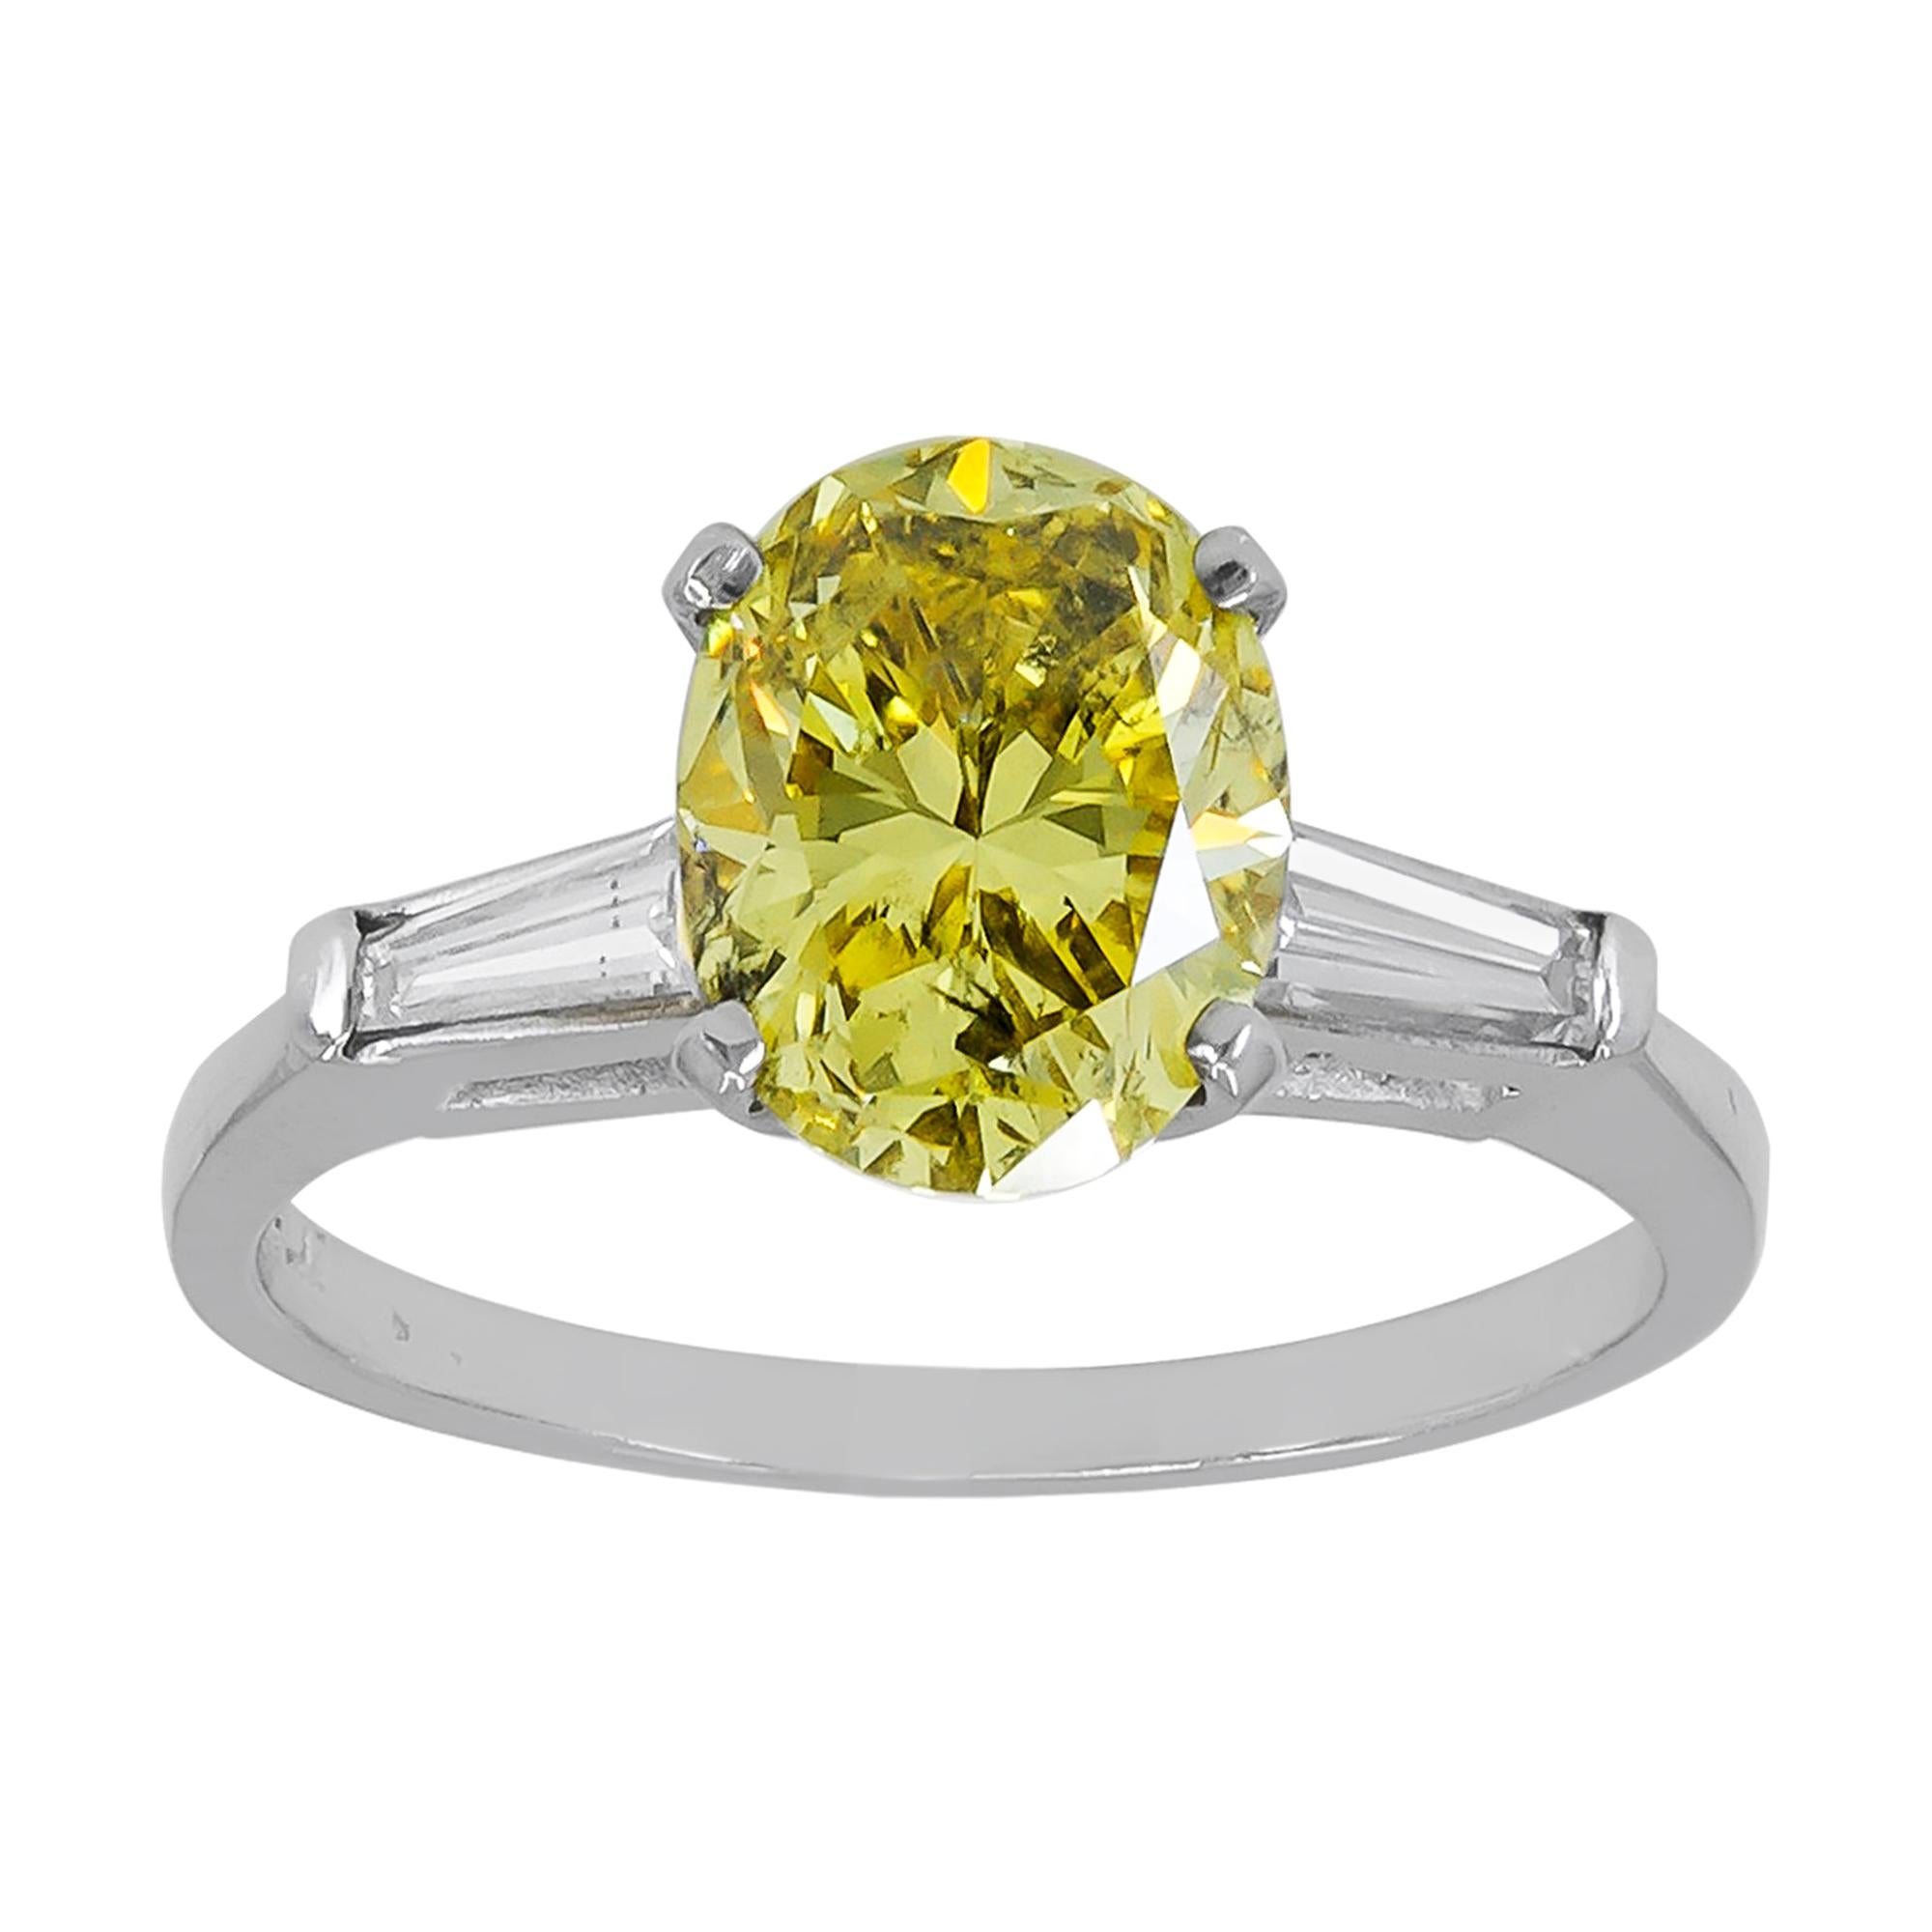 Spectra Fine Jewelry, GIA Certified 2.14 Carat Fancy Vivid Yellow Diamond Ring For Sale